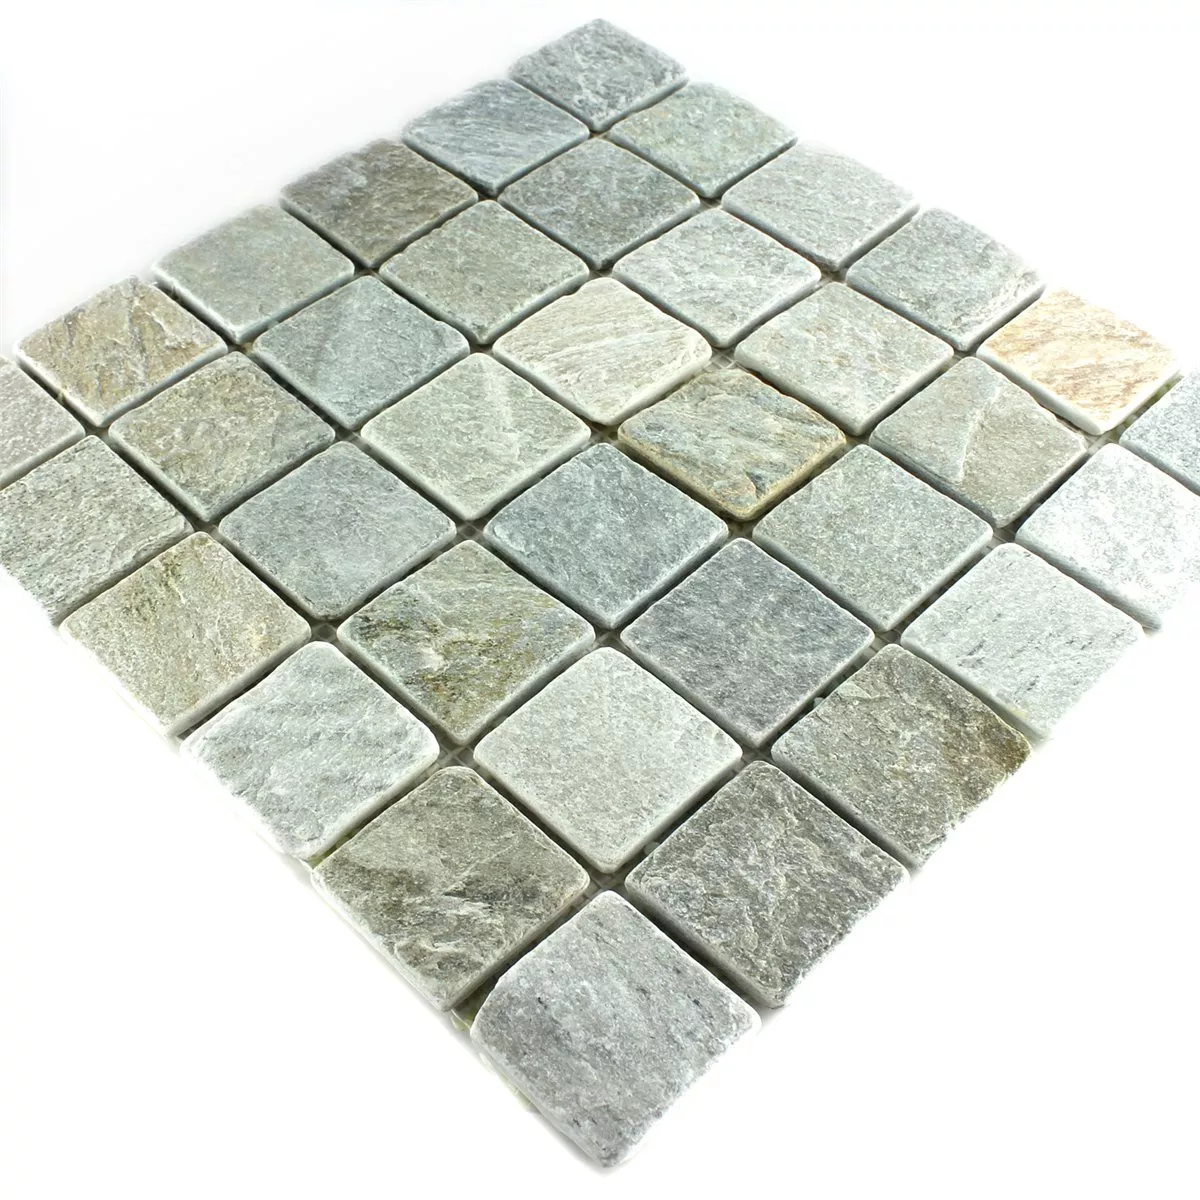 Sample Mosaic Tiles Quartzite Beige Grey 